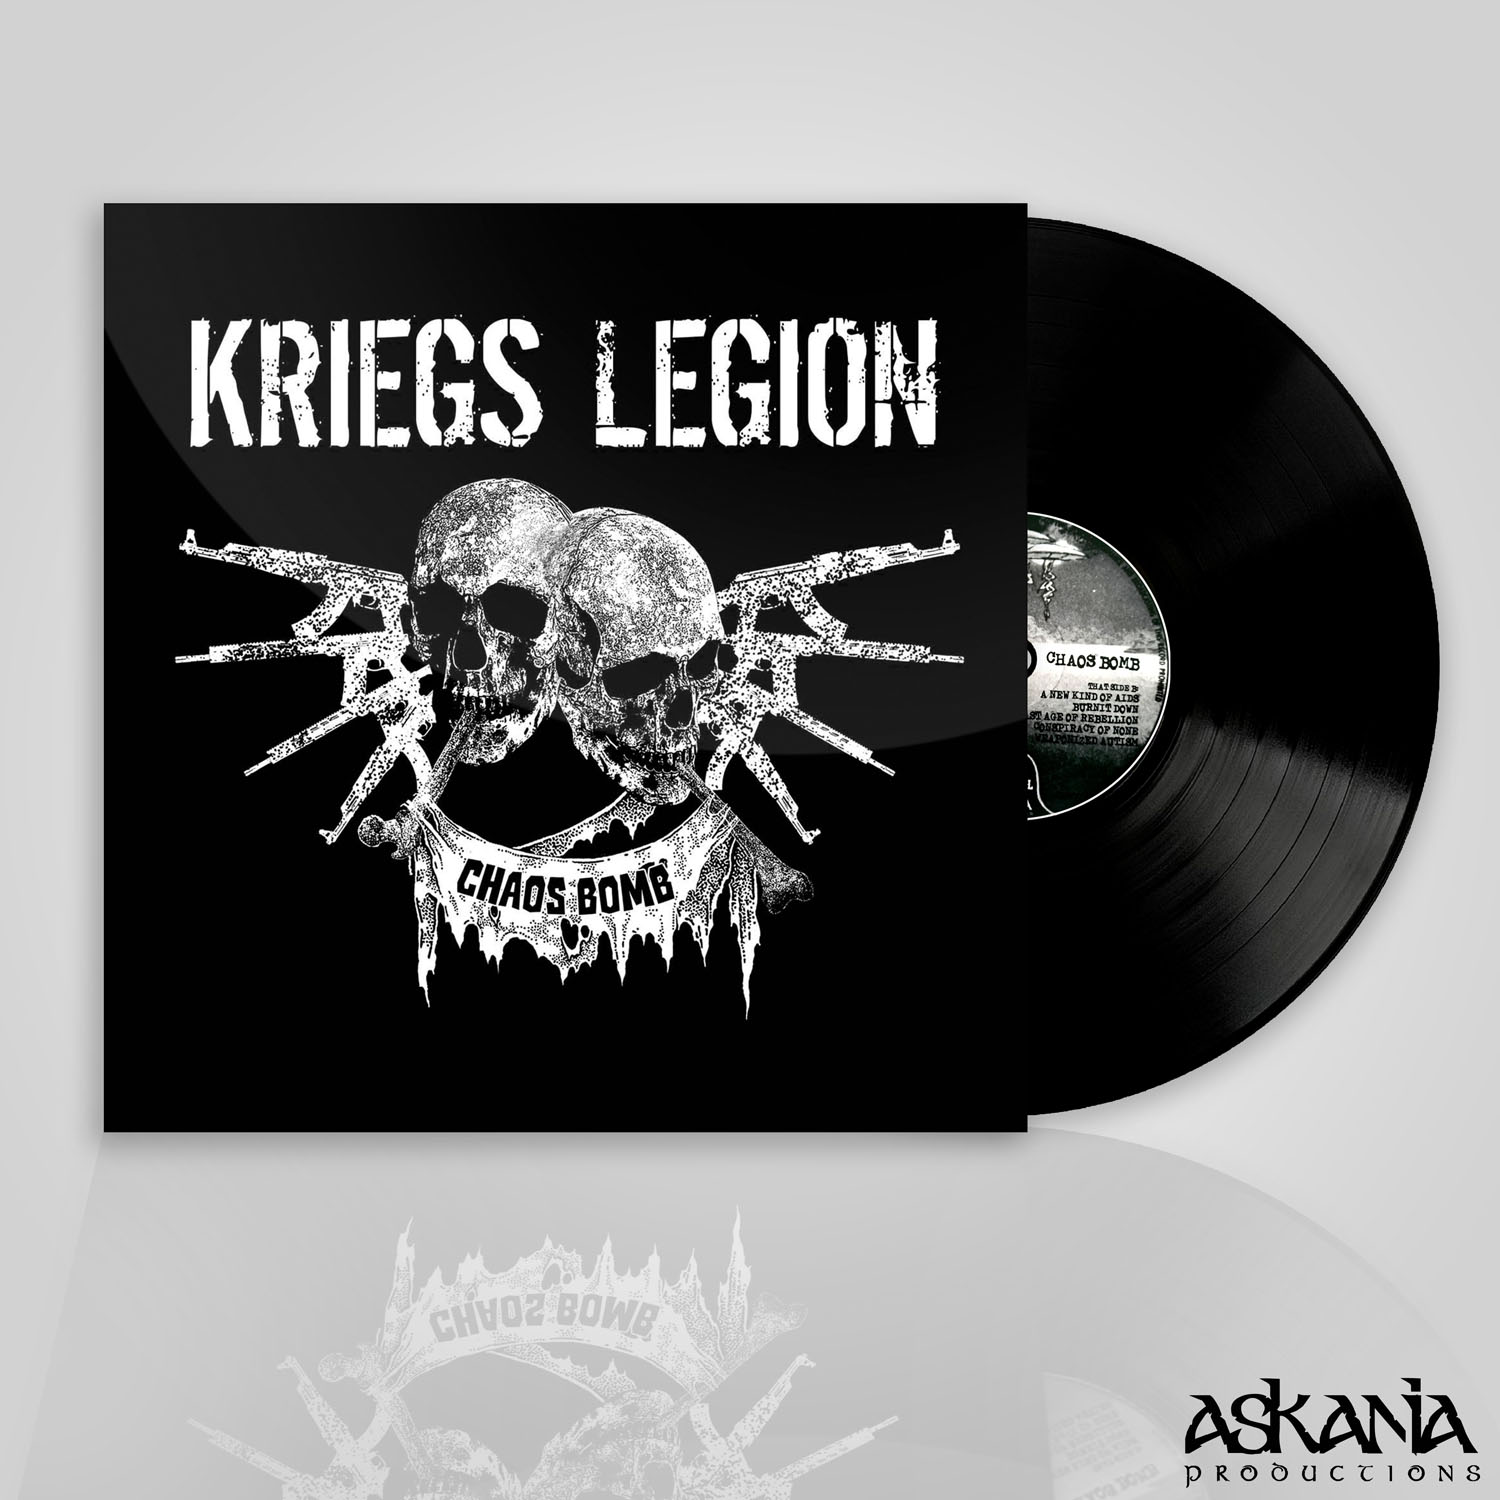 Kriegs Legion "Chaos Bomb" black LP